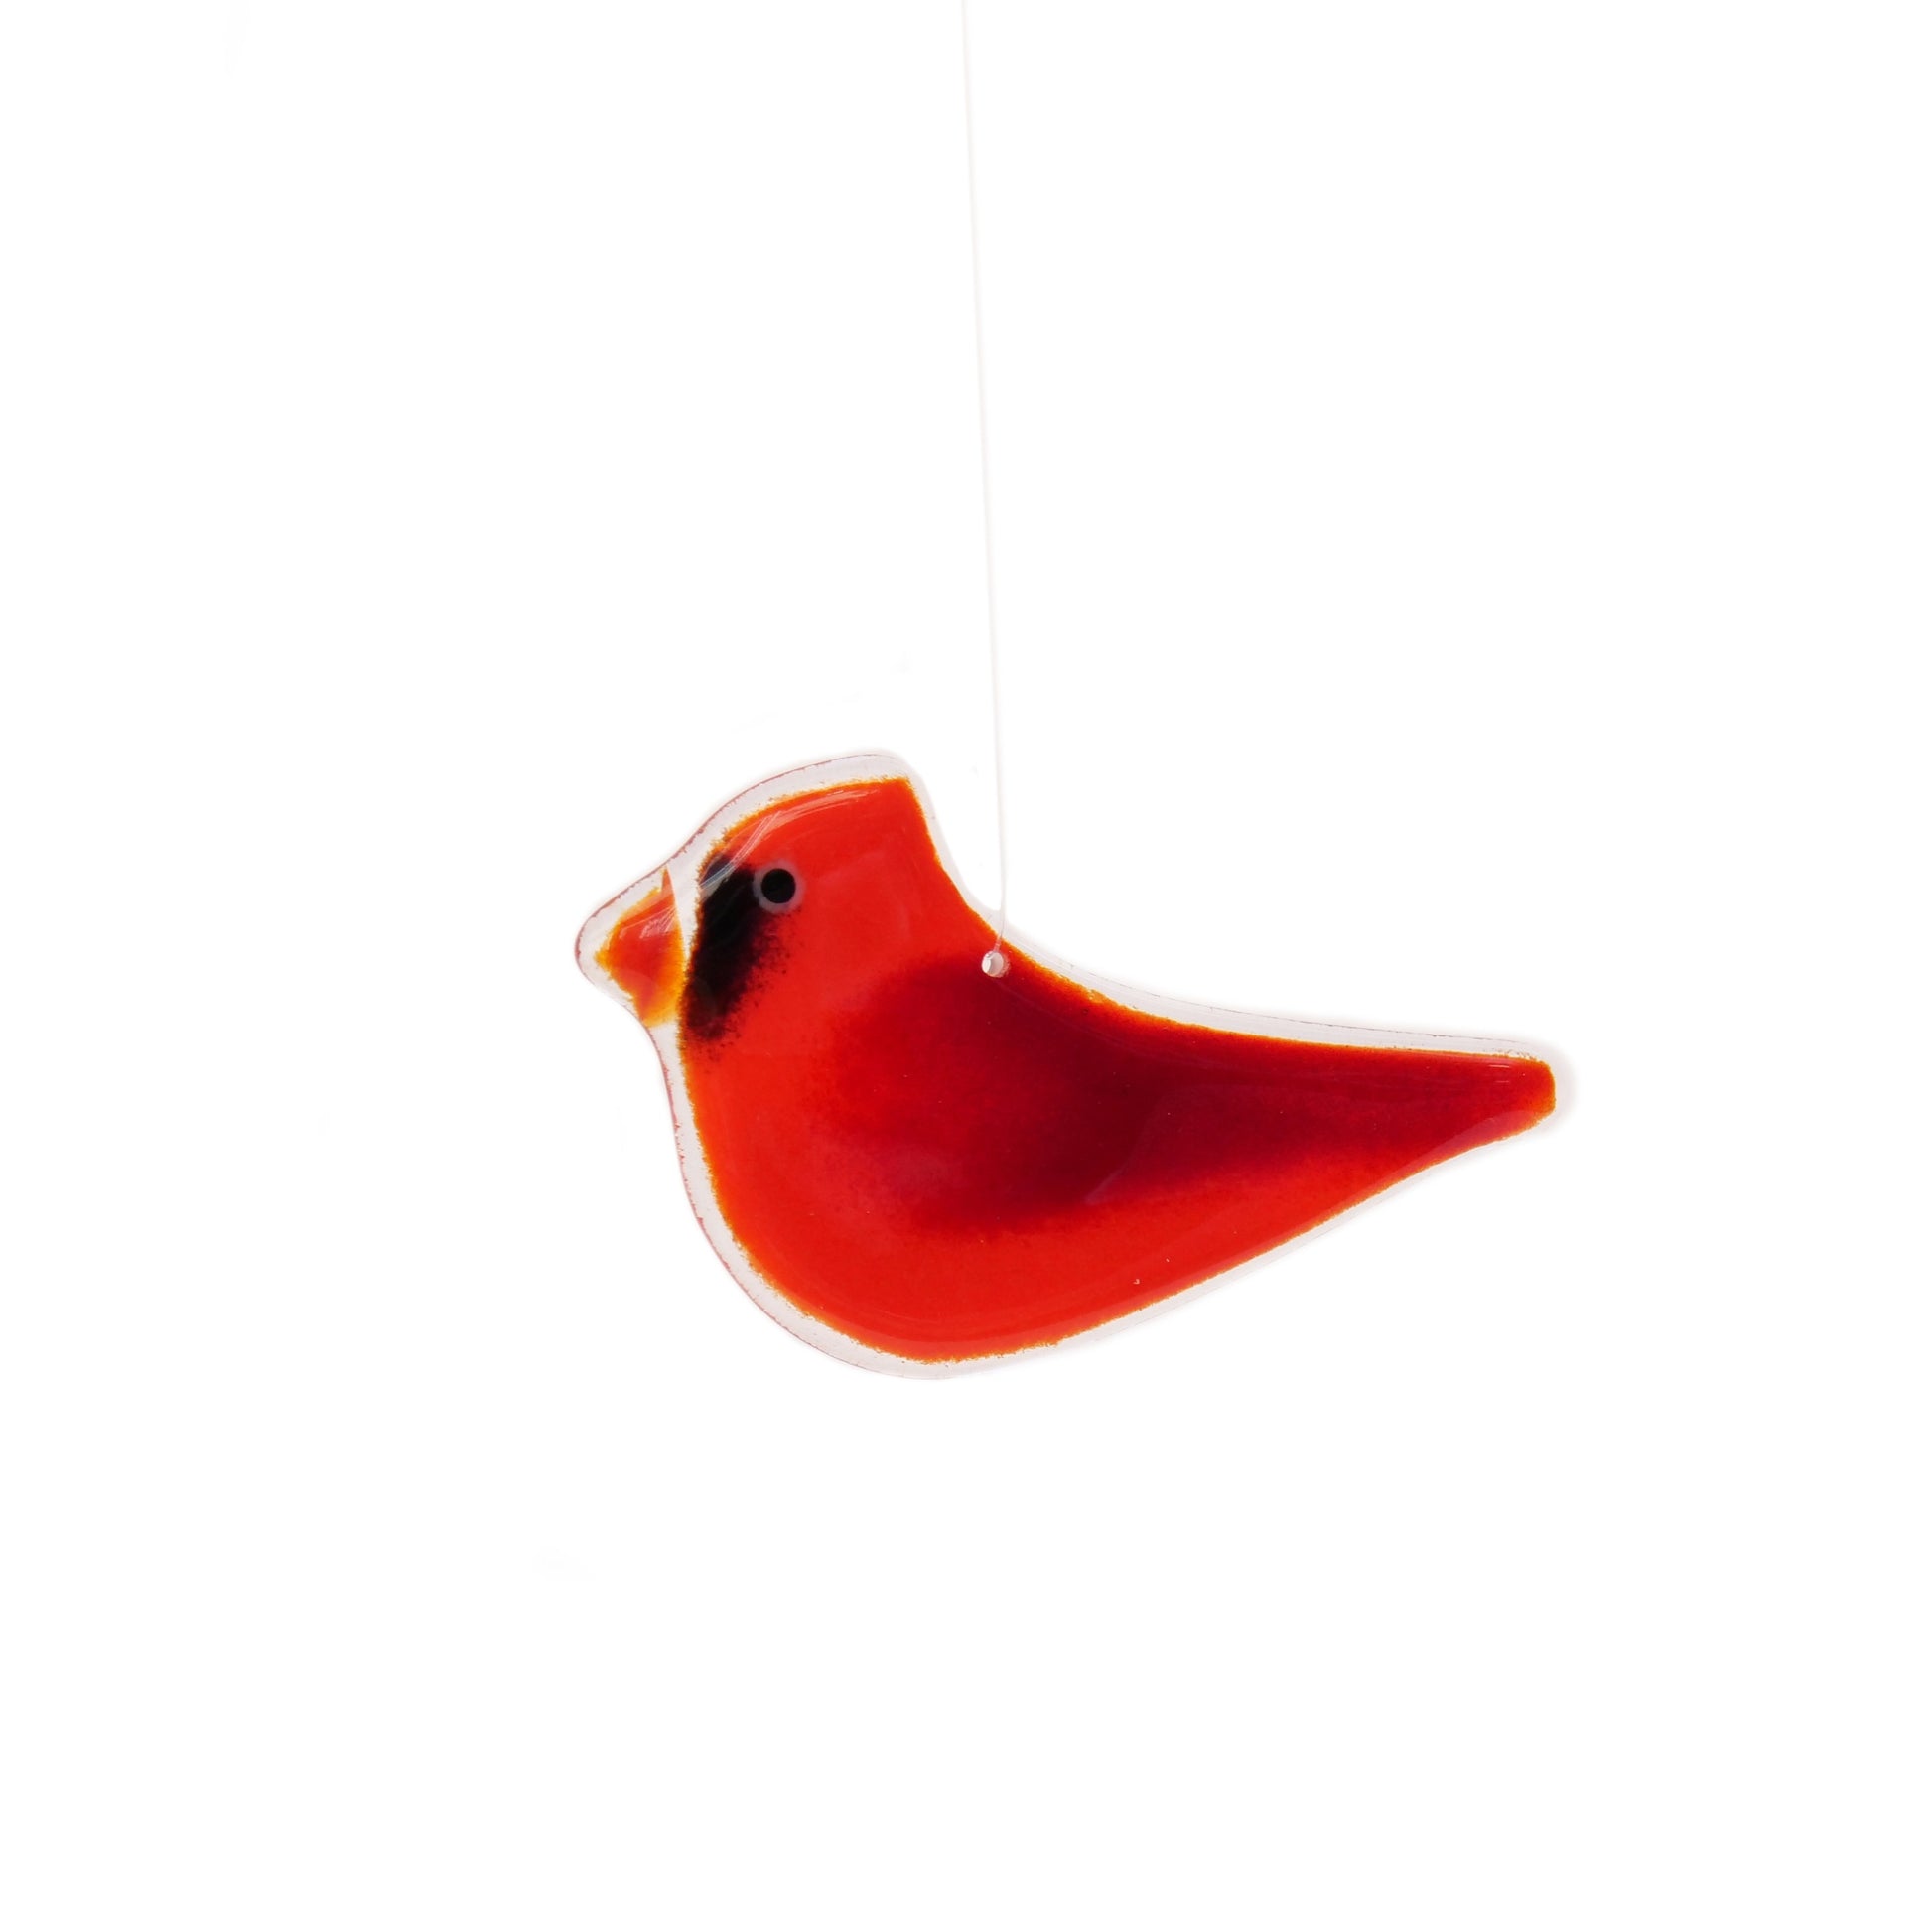 Glass cardinal ornament handmade in Canada.